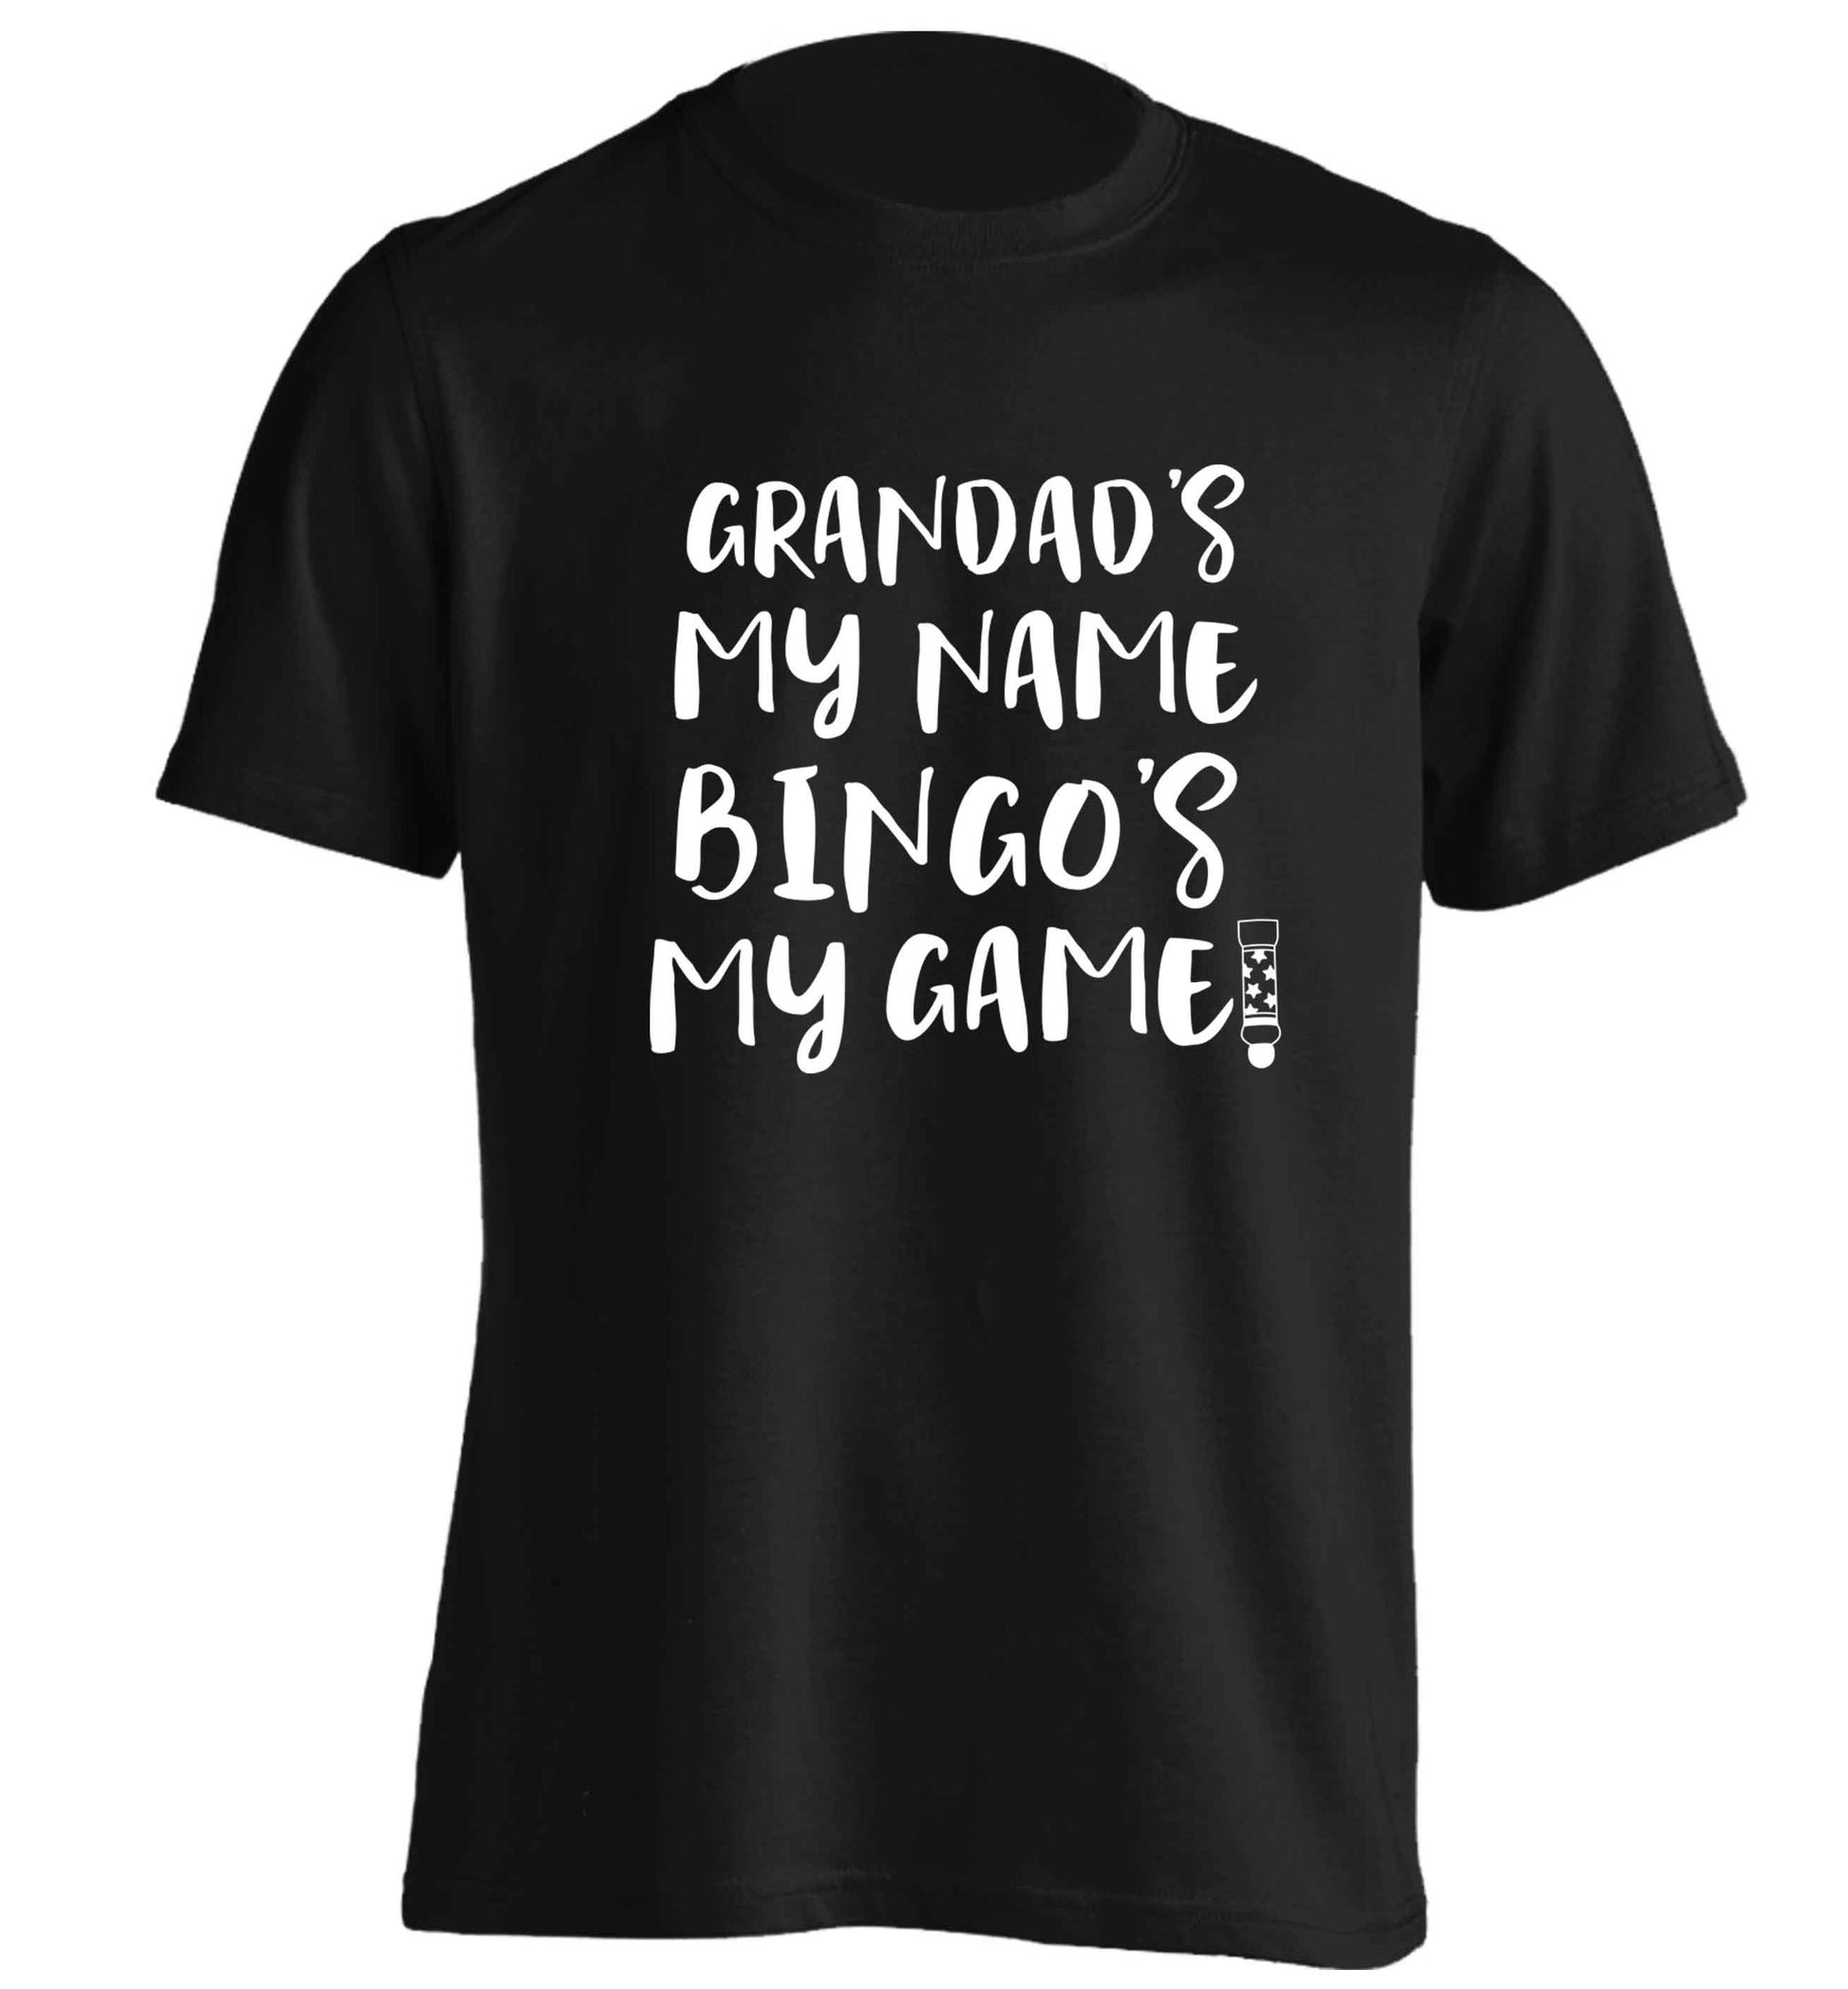 Grandad's my name bingo's my game! adults unisex black Tshirt 2XL